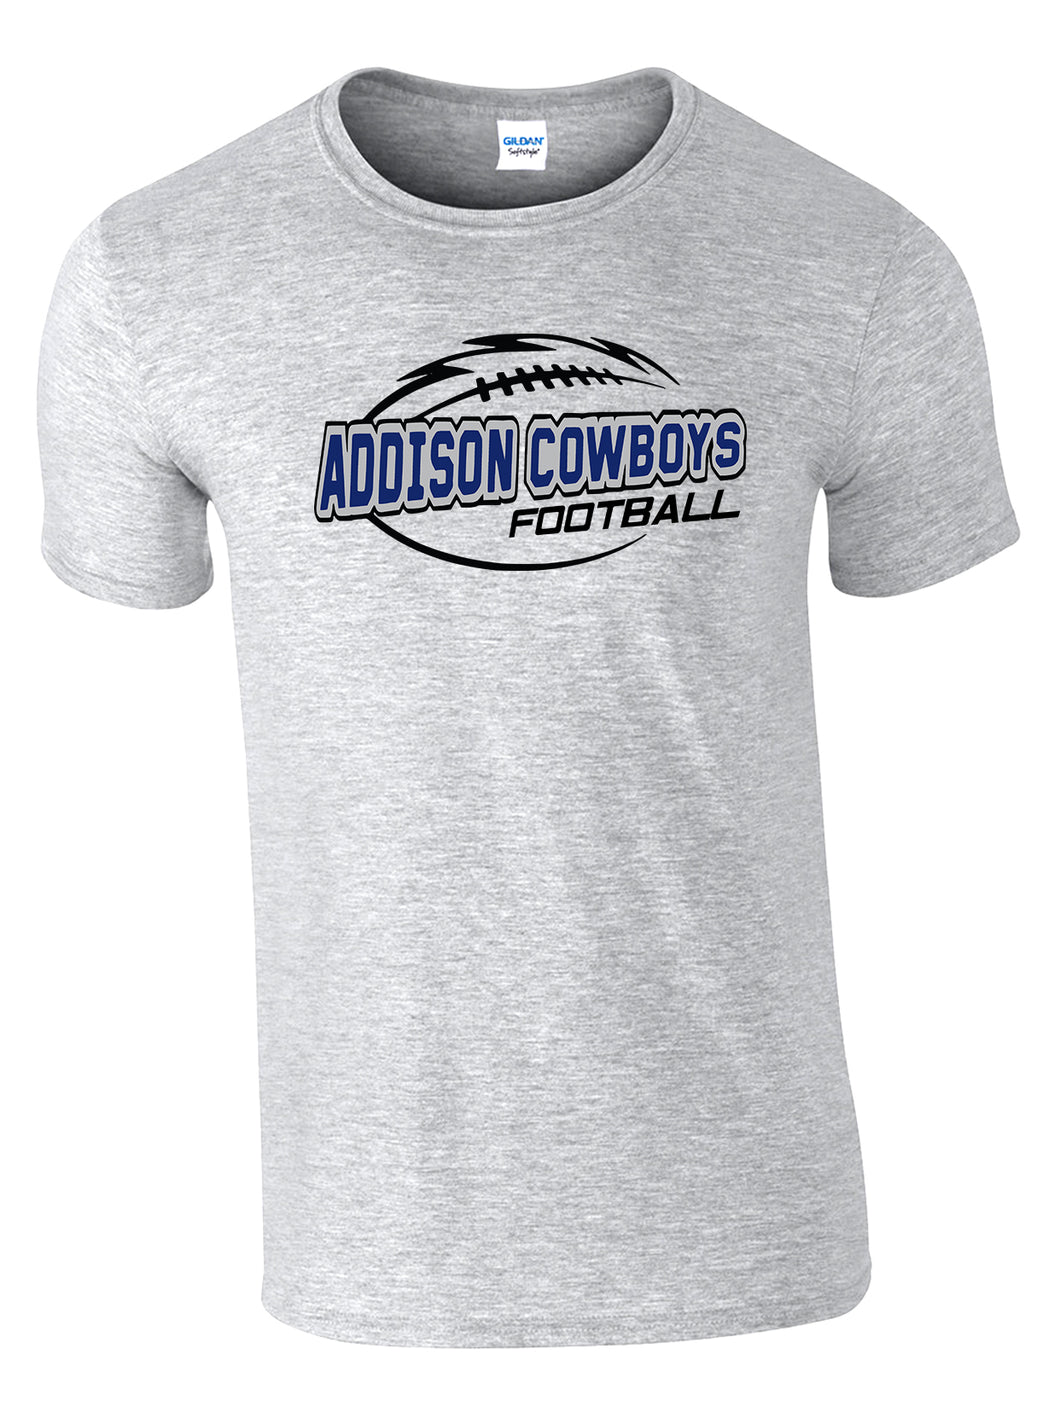 Addison Cowboys Football - T-shirt - YOUTH